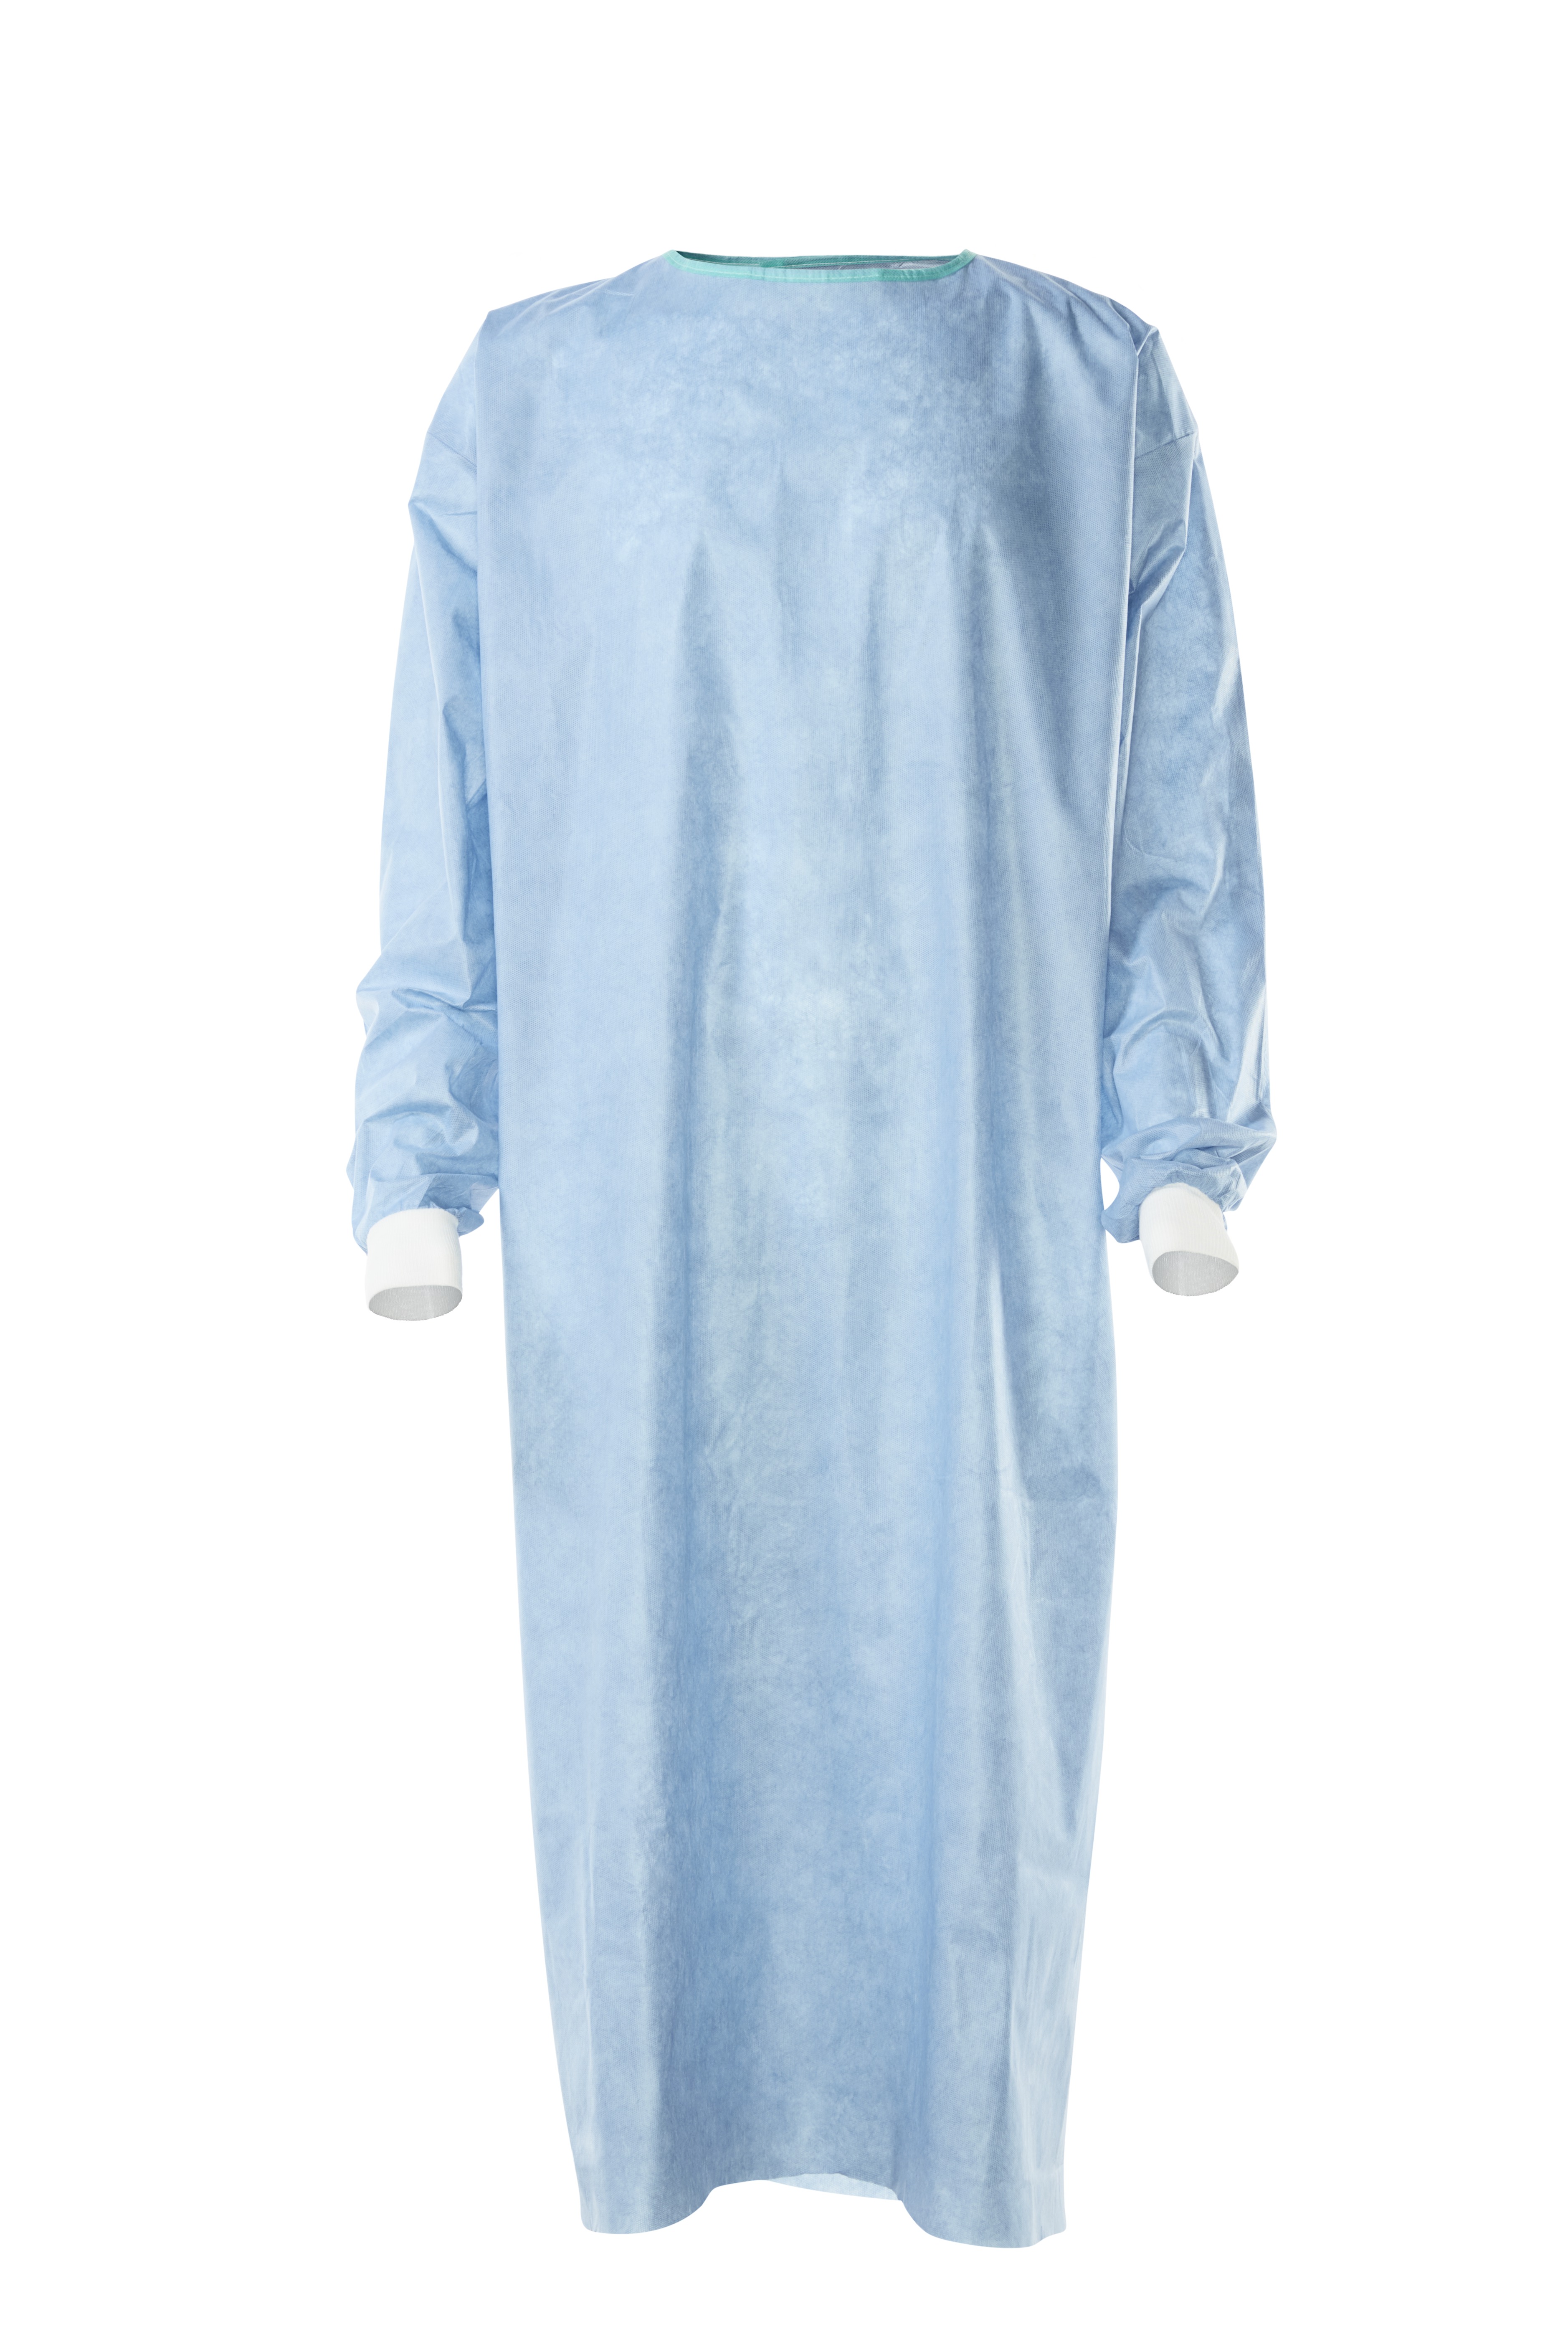 Foliodress gown Protect Basic OP-Mantel, Gr. XL, steril, blau, 1 Stck.